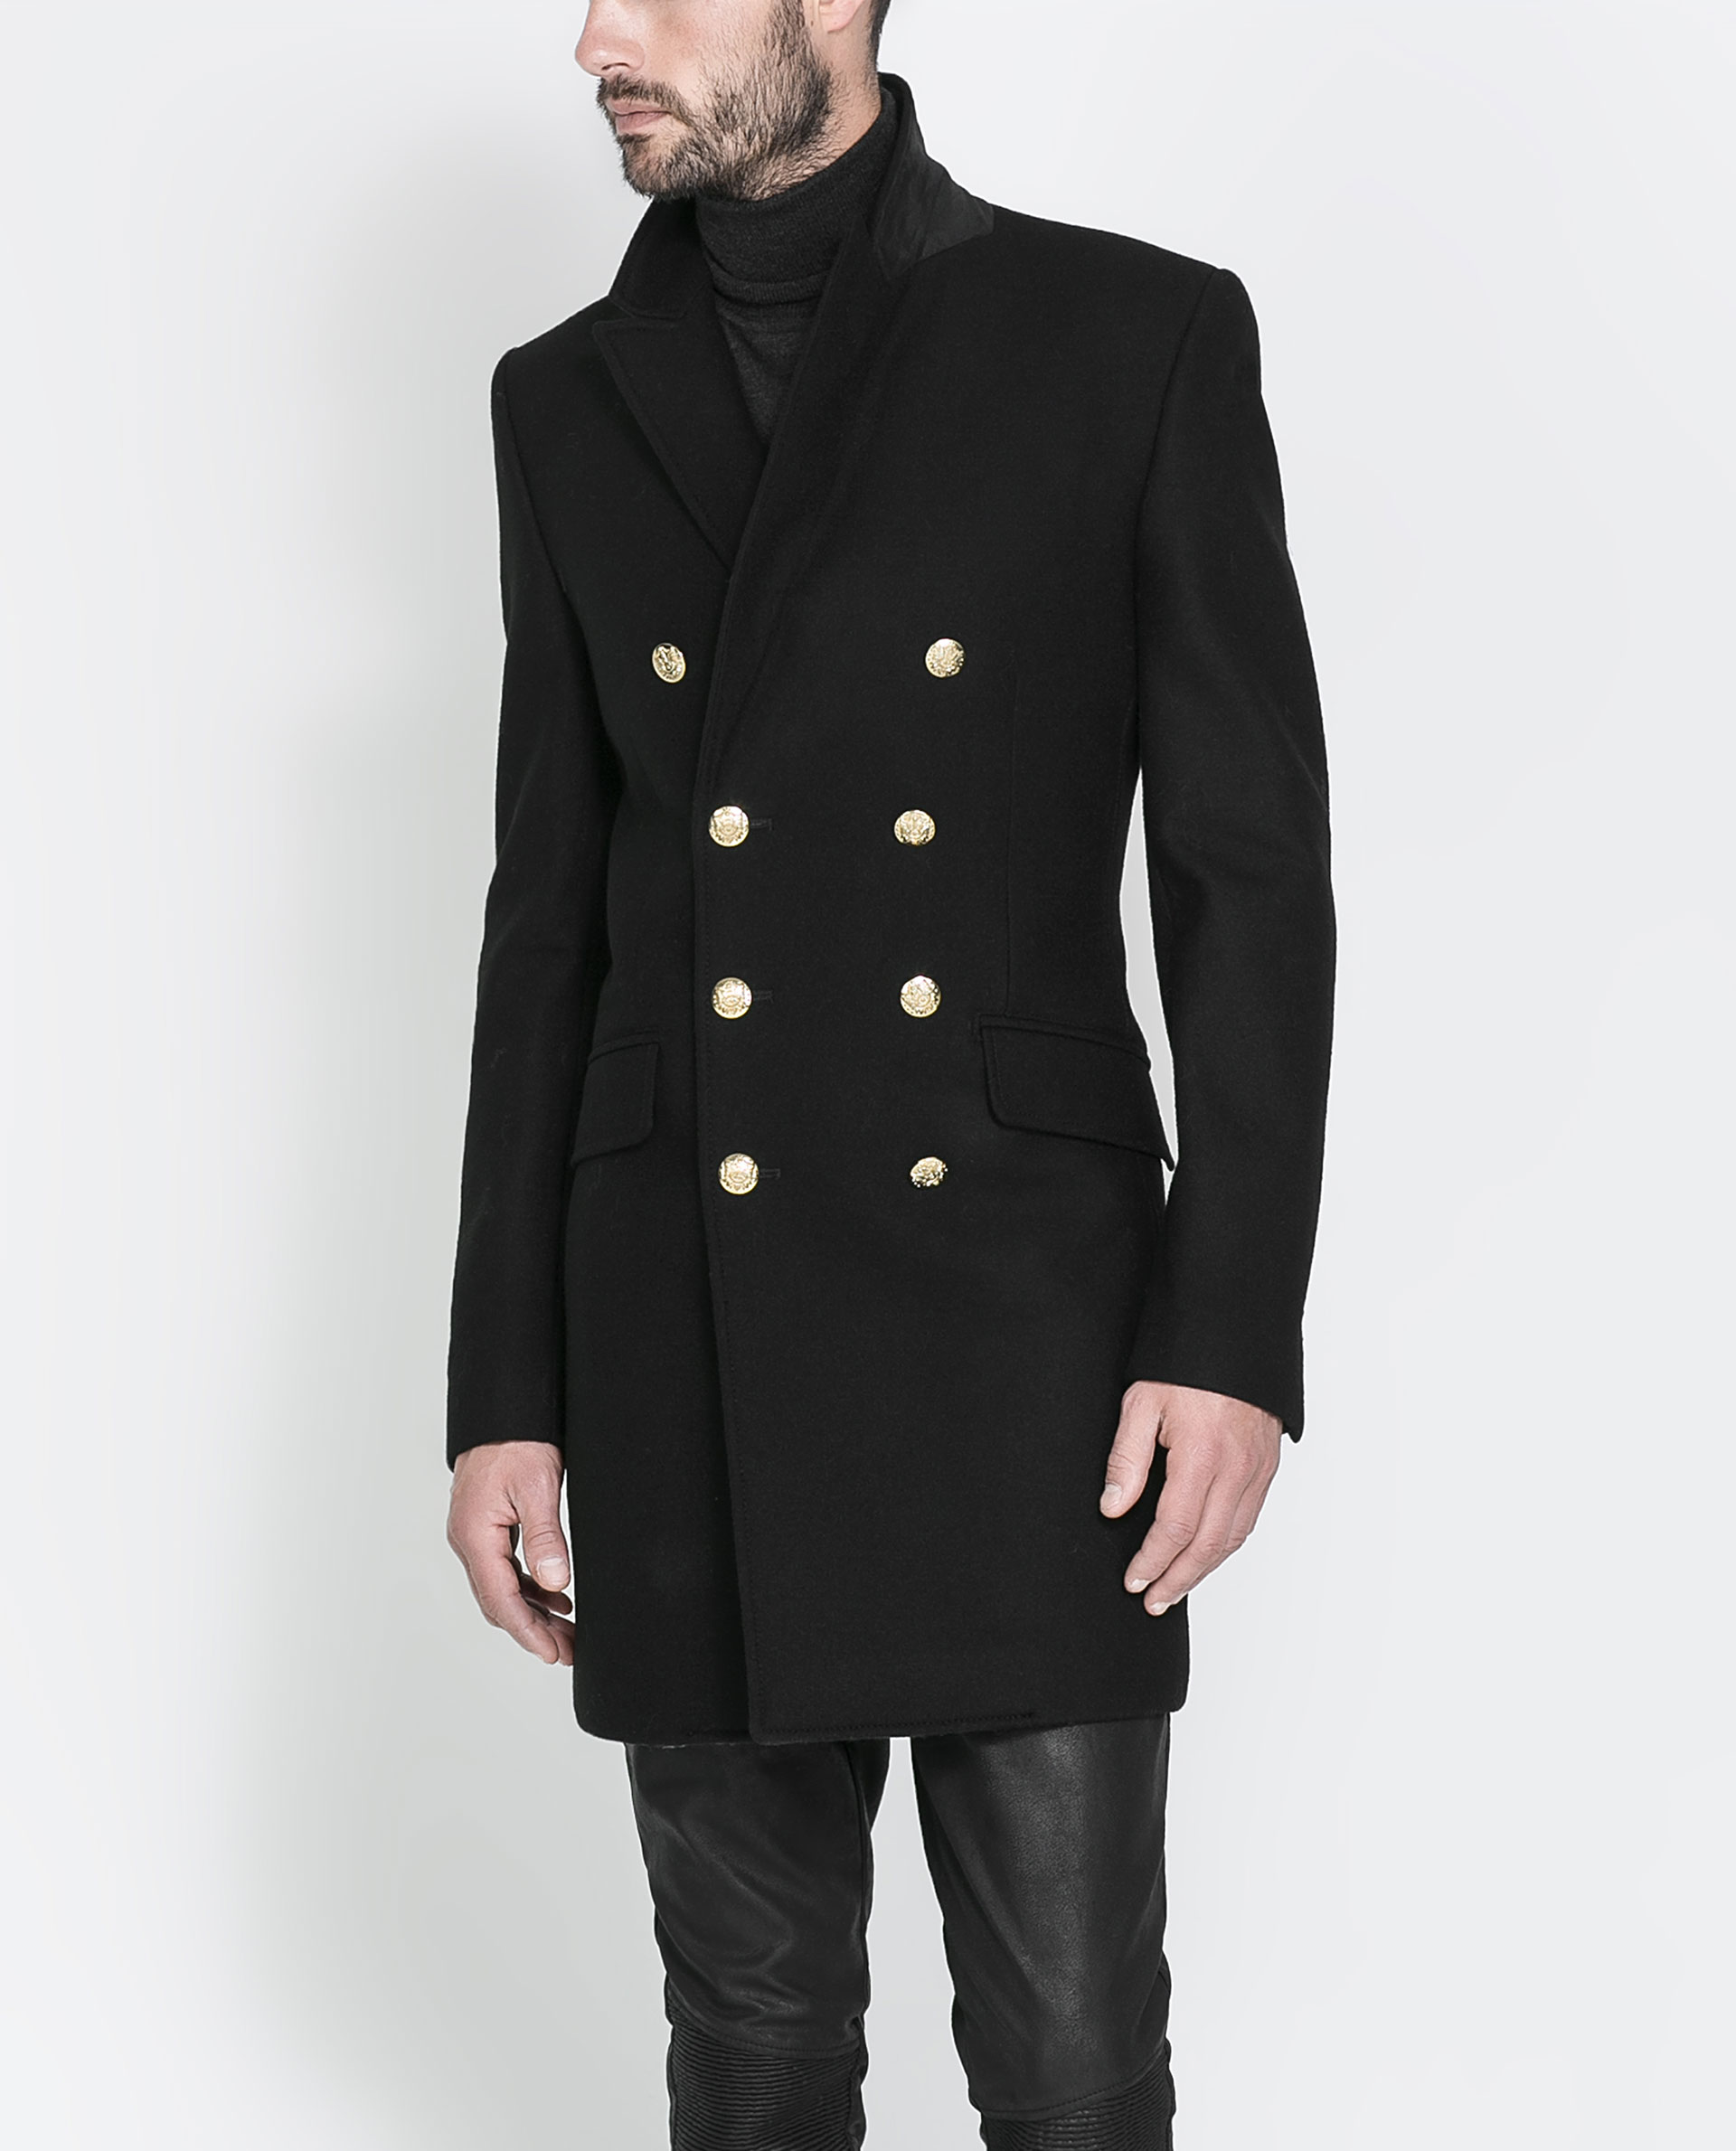 Мужское поло юс. Zara man пальто Military Coat. Пальто бушлат мужское Zara. Пальто бушлат мужское 48-50 Zara.